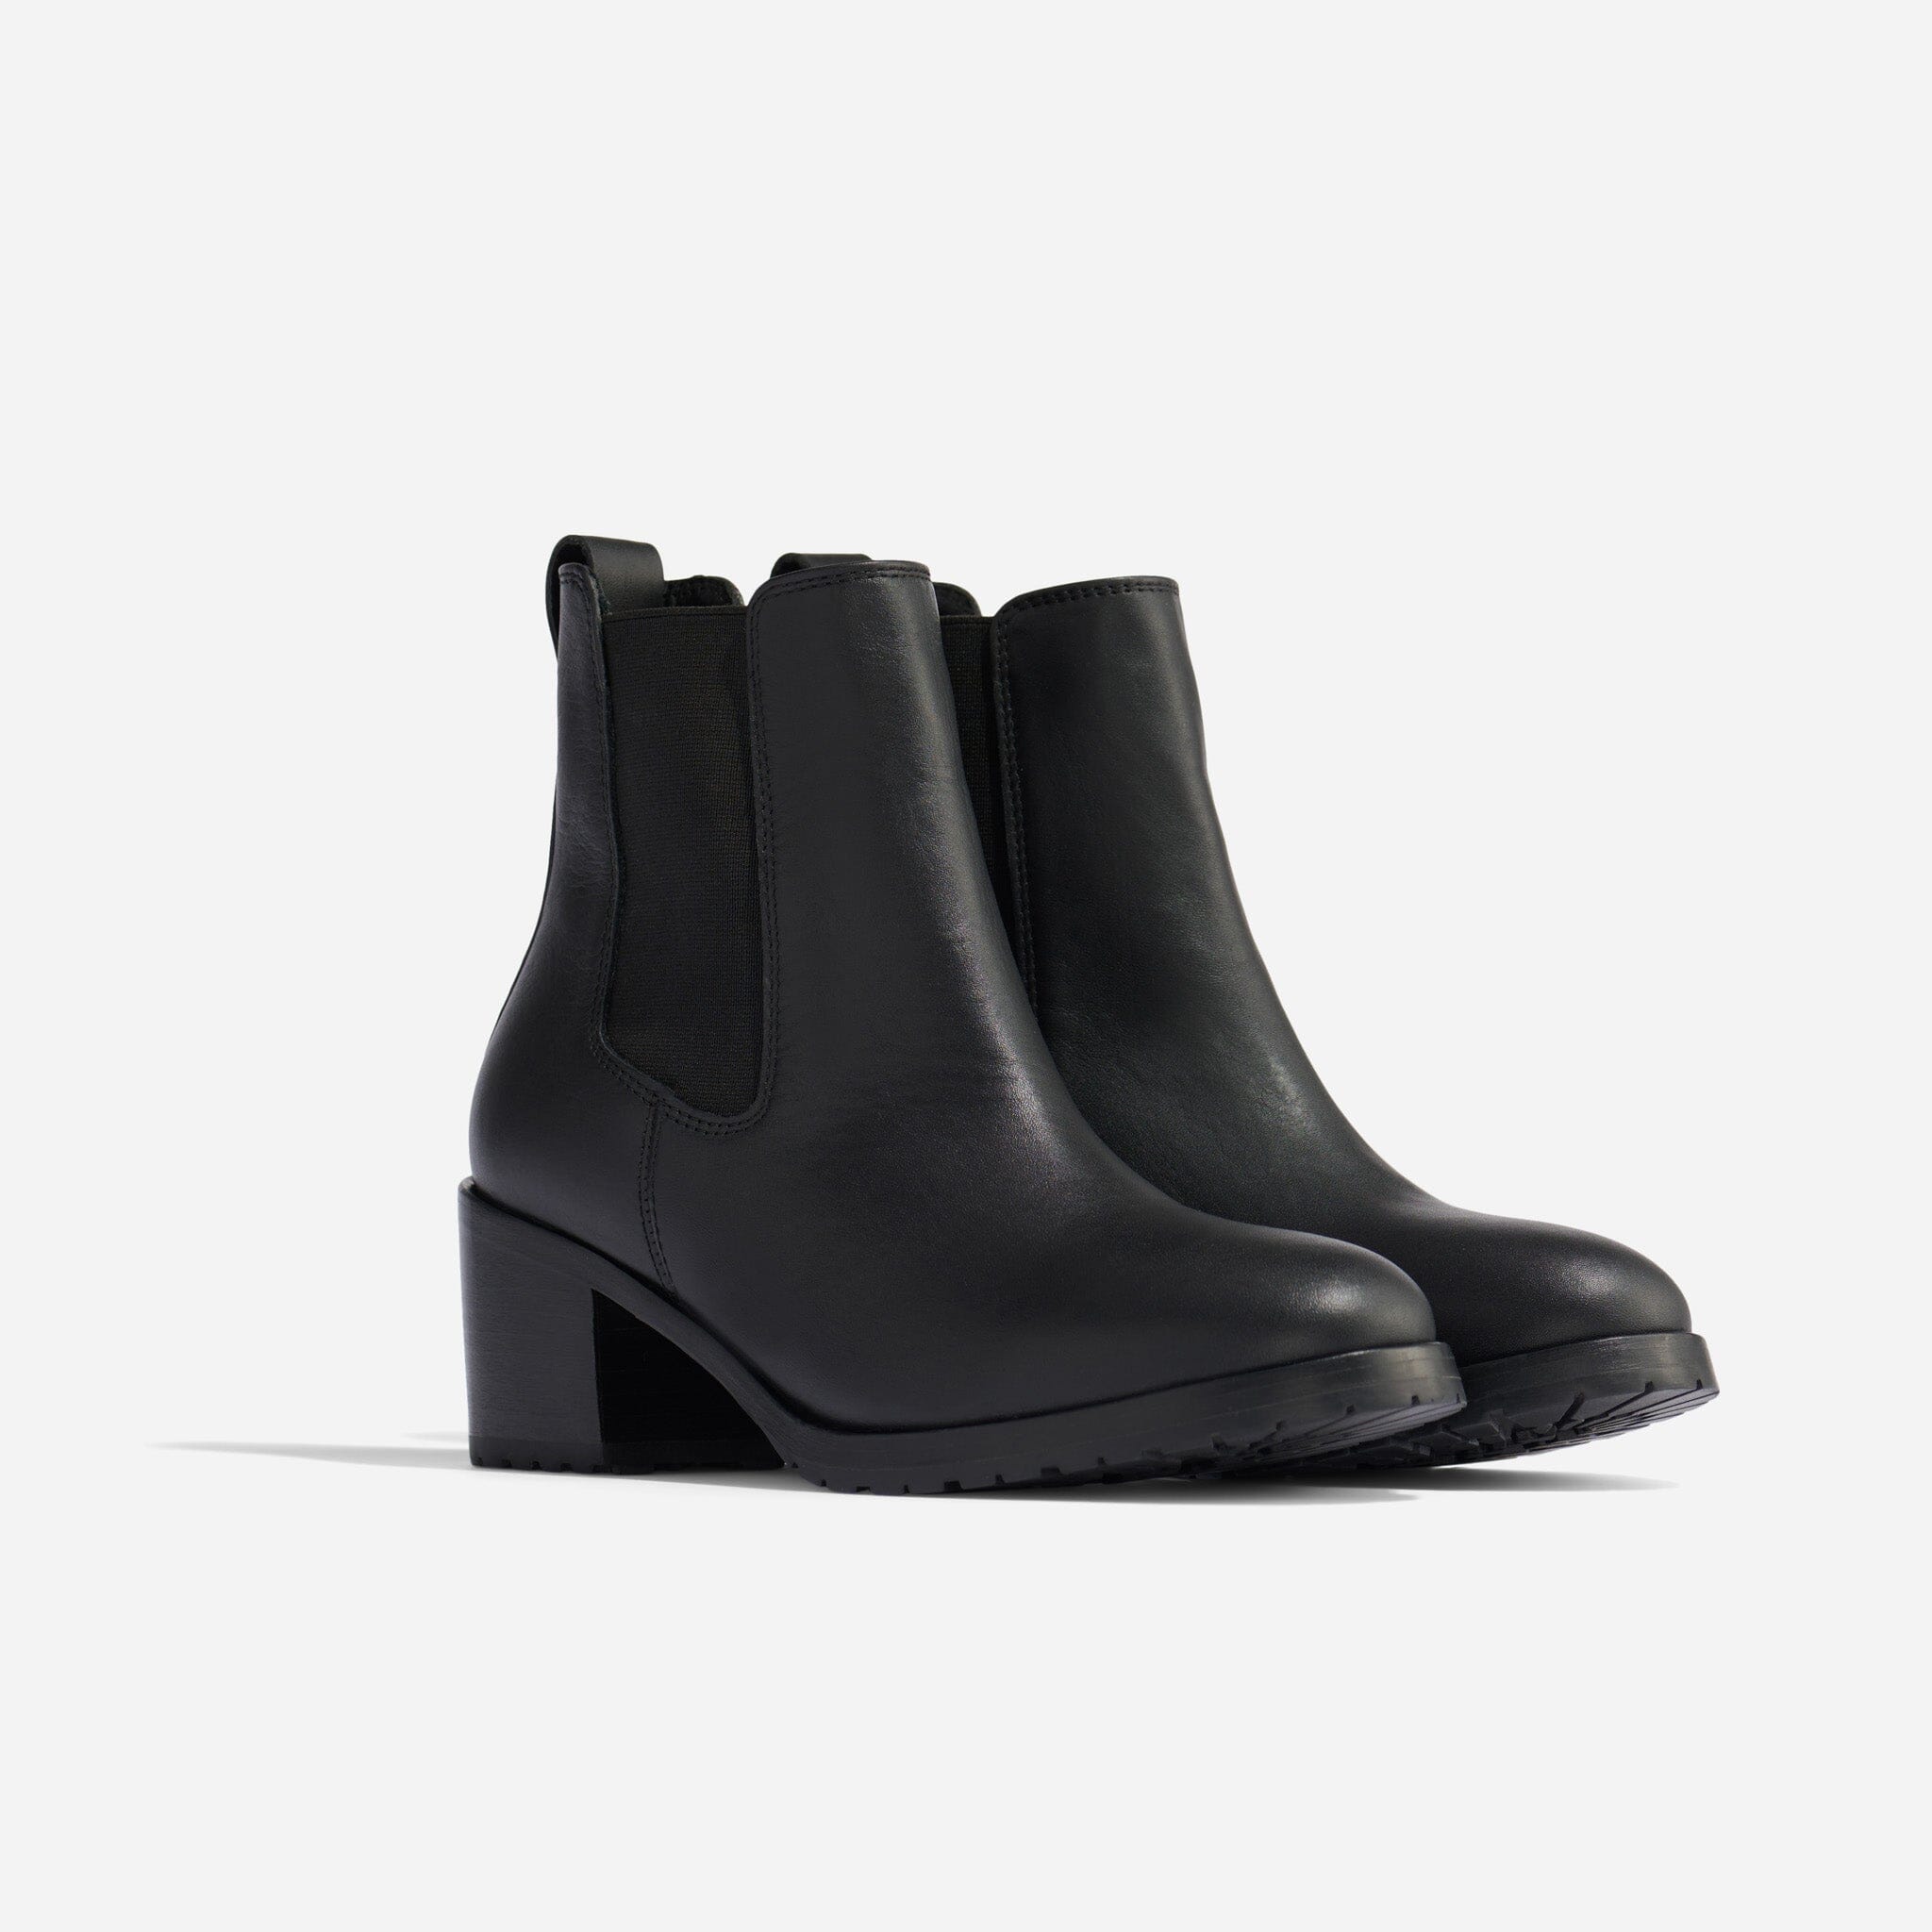 Blundstone Women's Heeled Boots - Black